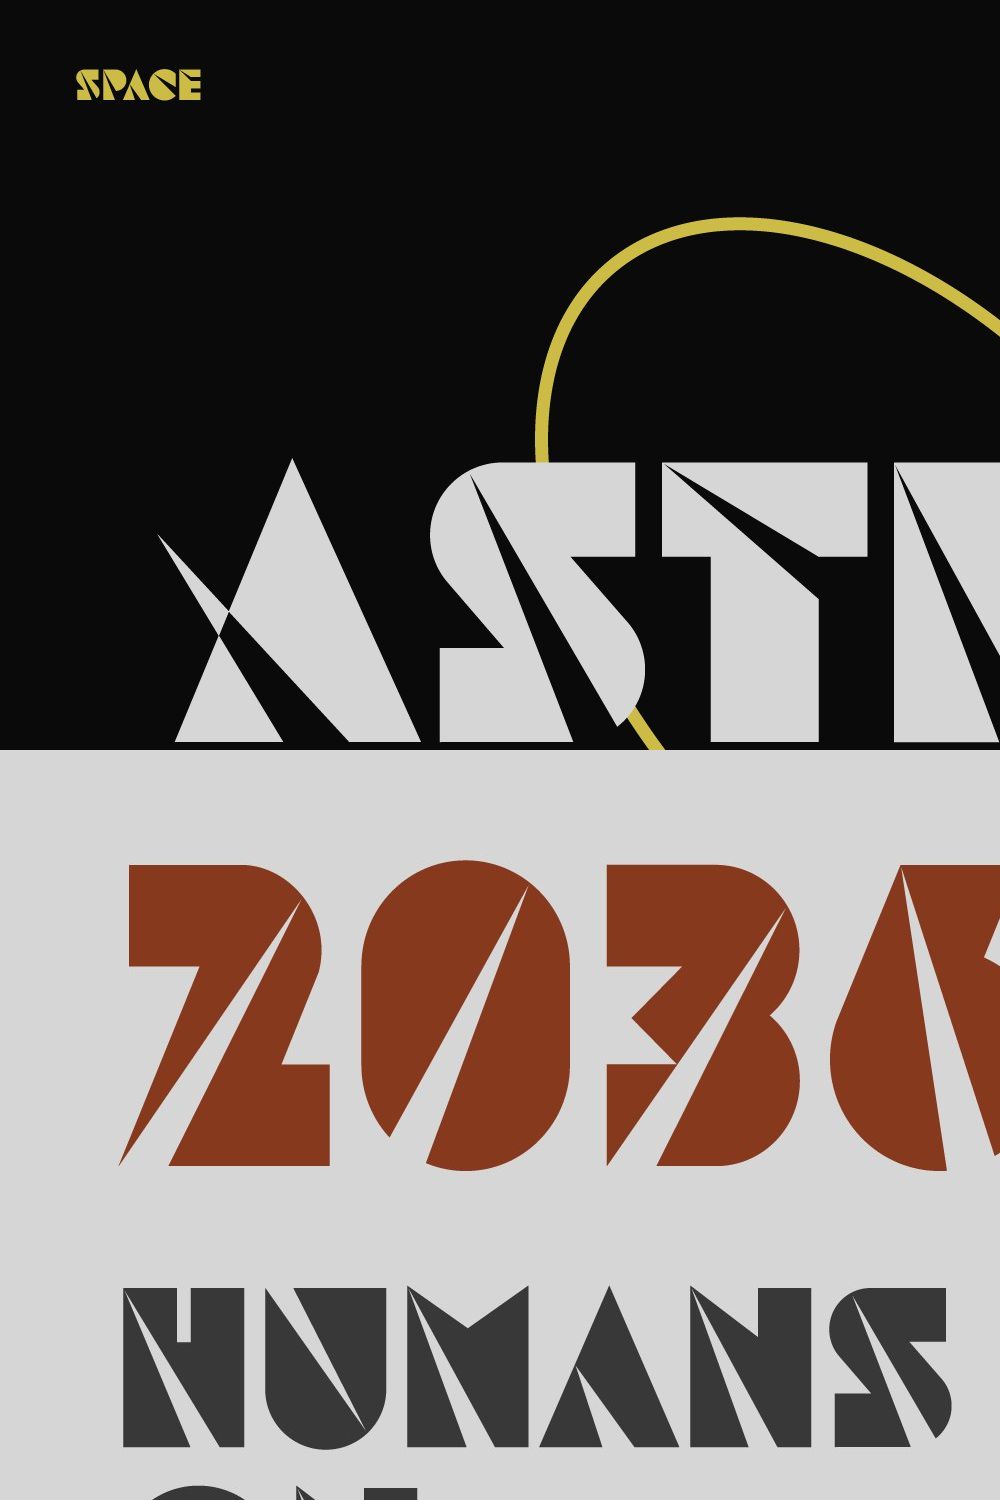 Astroz - Space Futuristic SciFi Font pinterest preview image.